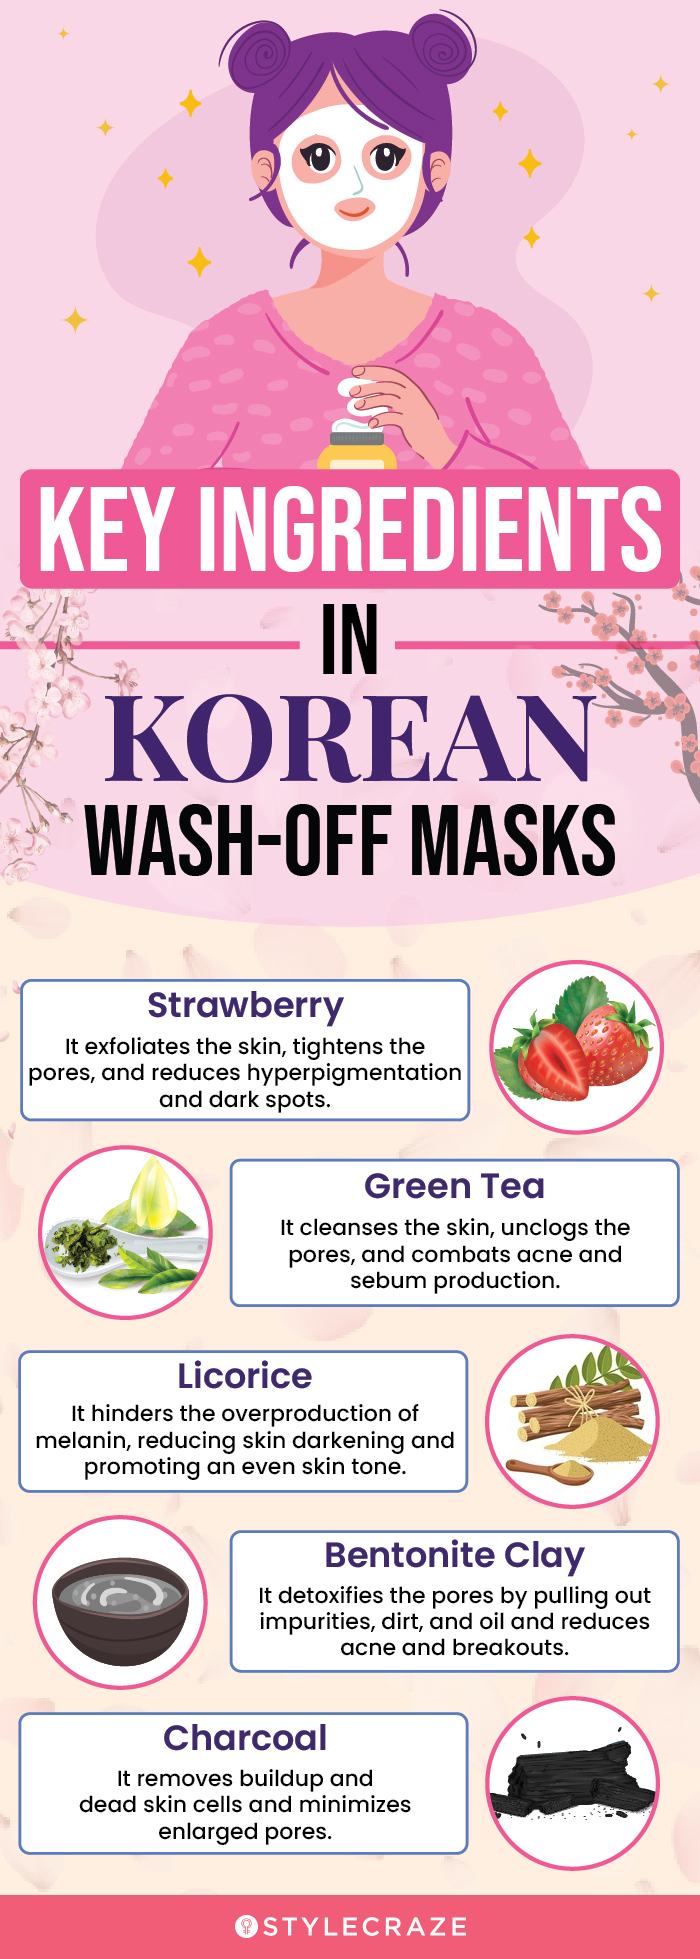 Key Ingredients In Korean Wash-Off Masks (infographic)